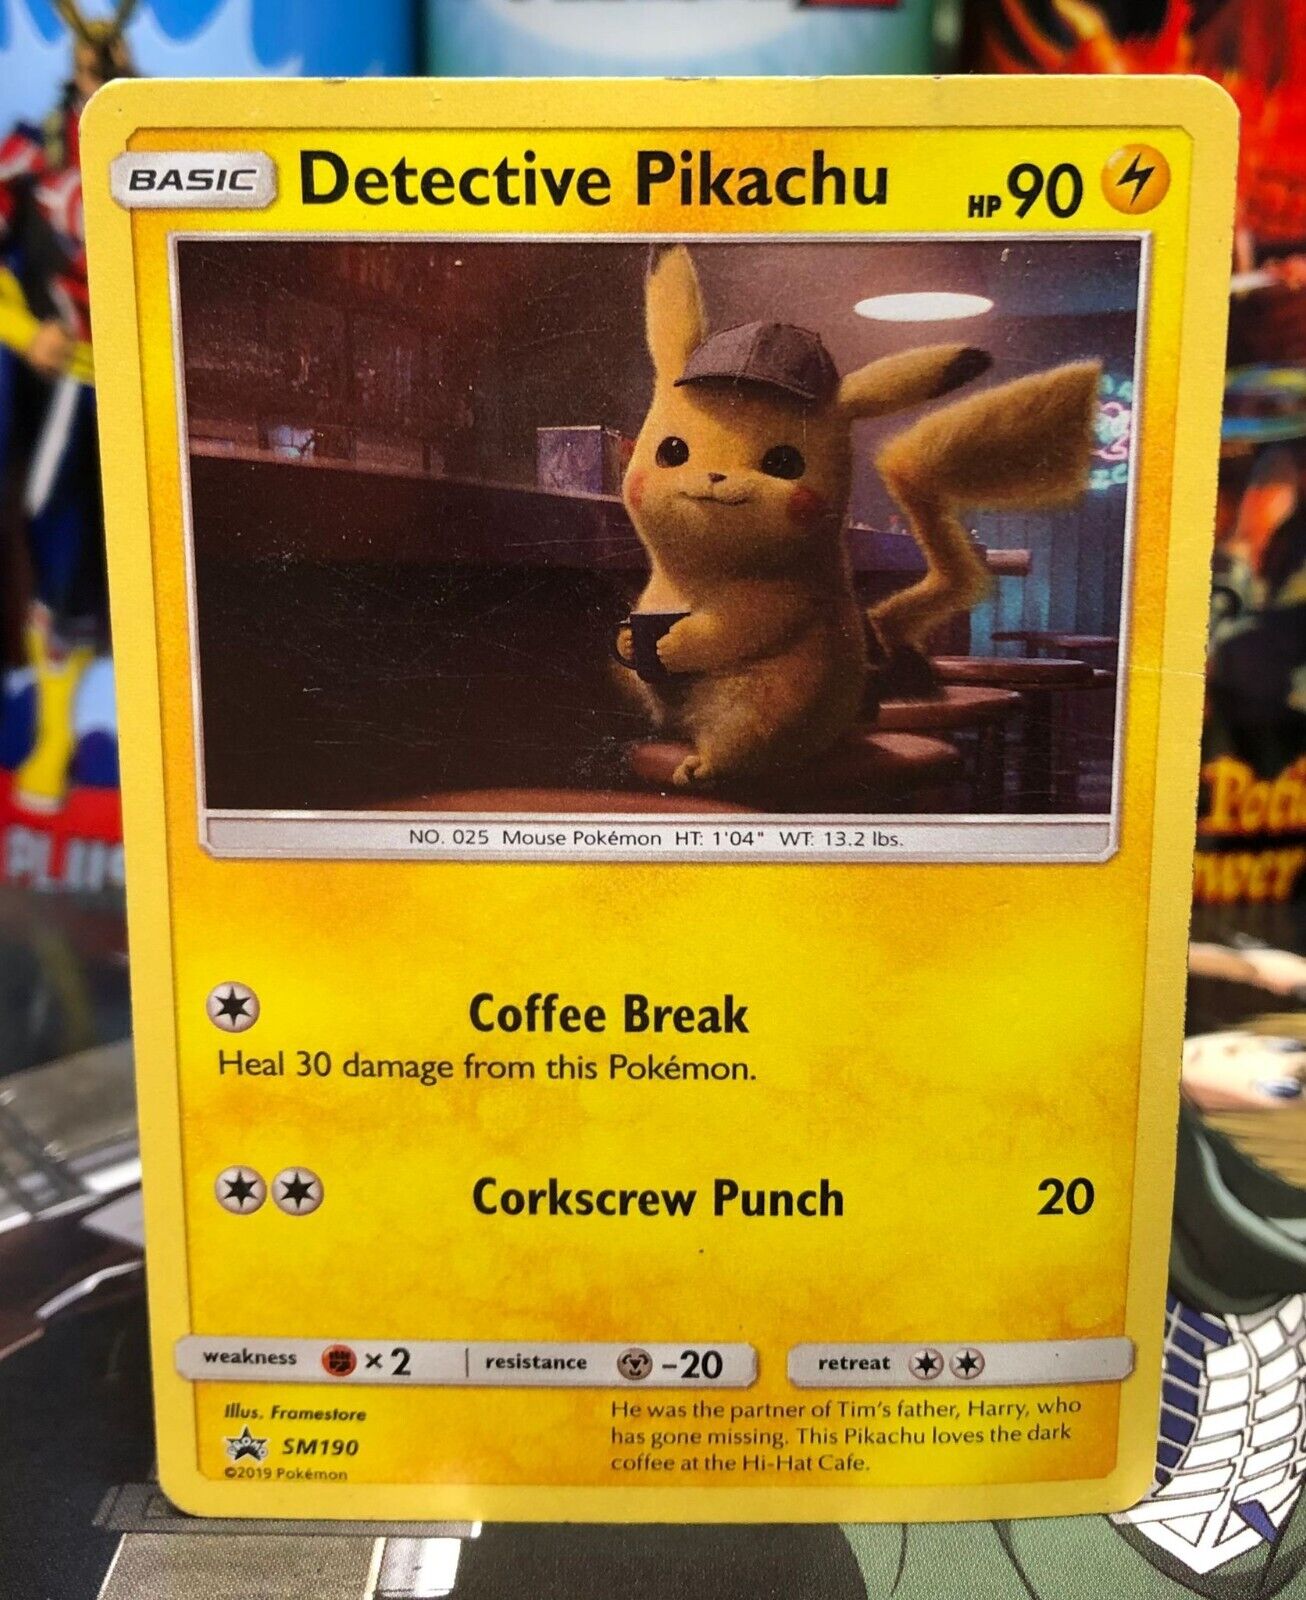 Pokémon TCG Detective Pikachu Detective Pikachu SM190 Promo Holo